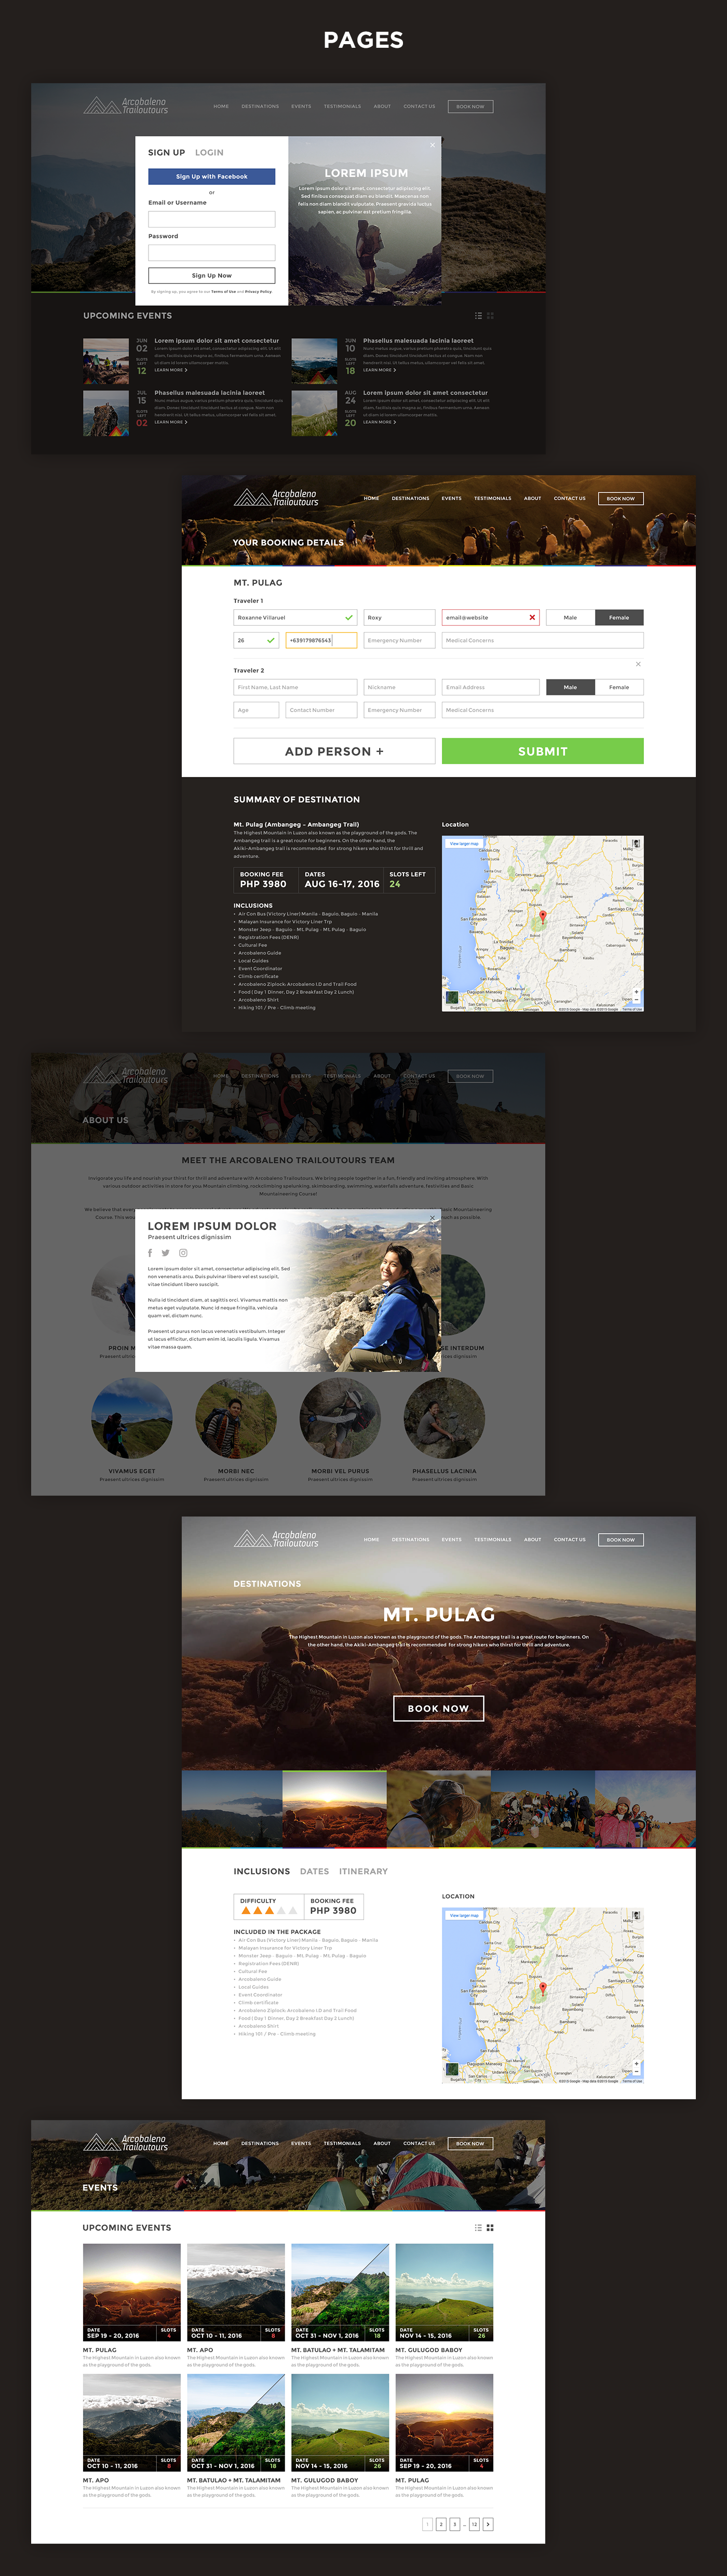 Webdesign Website adventure Travel tours mountaineering philippines